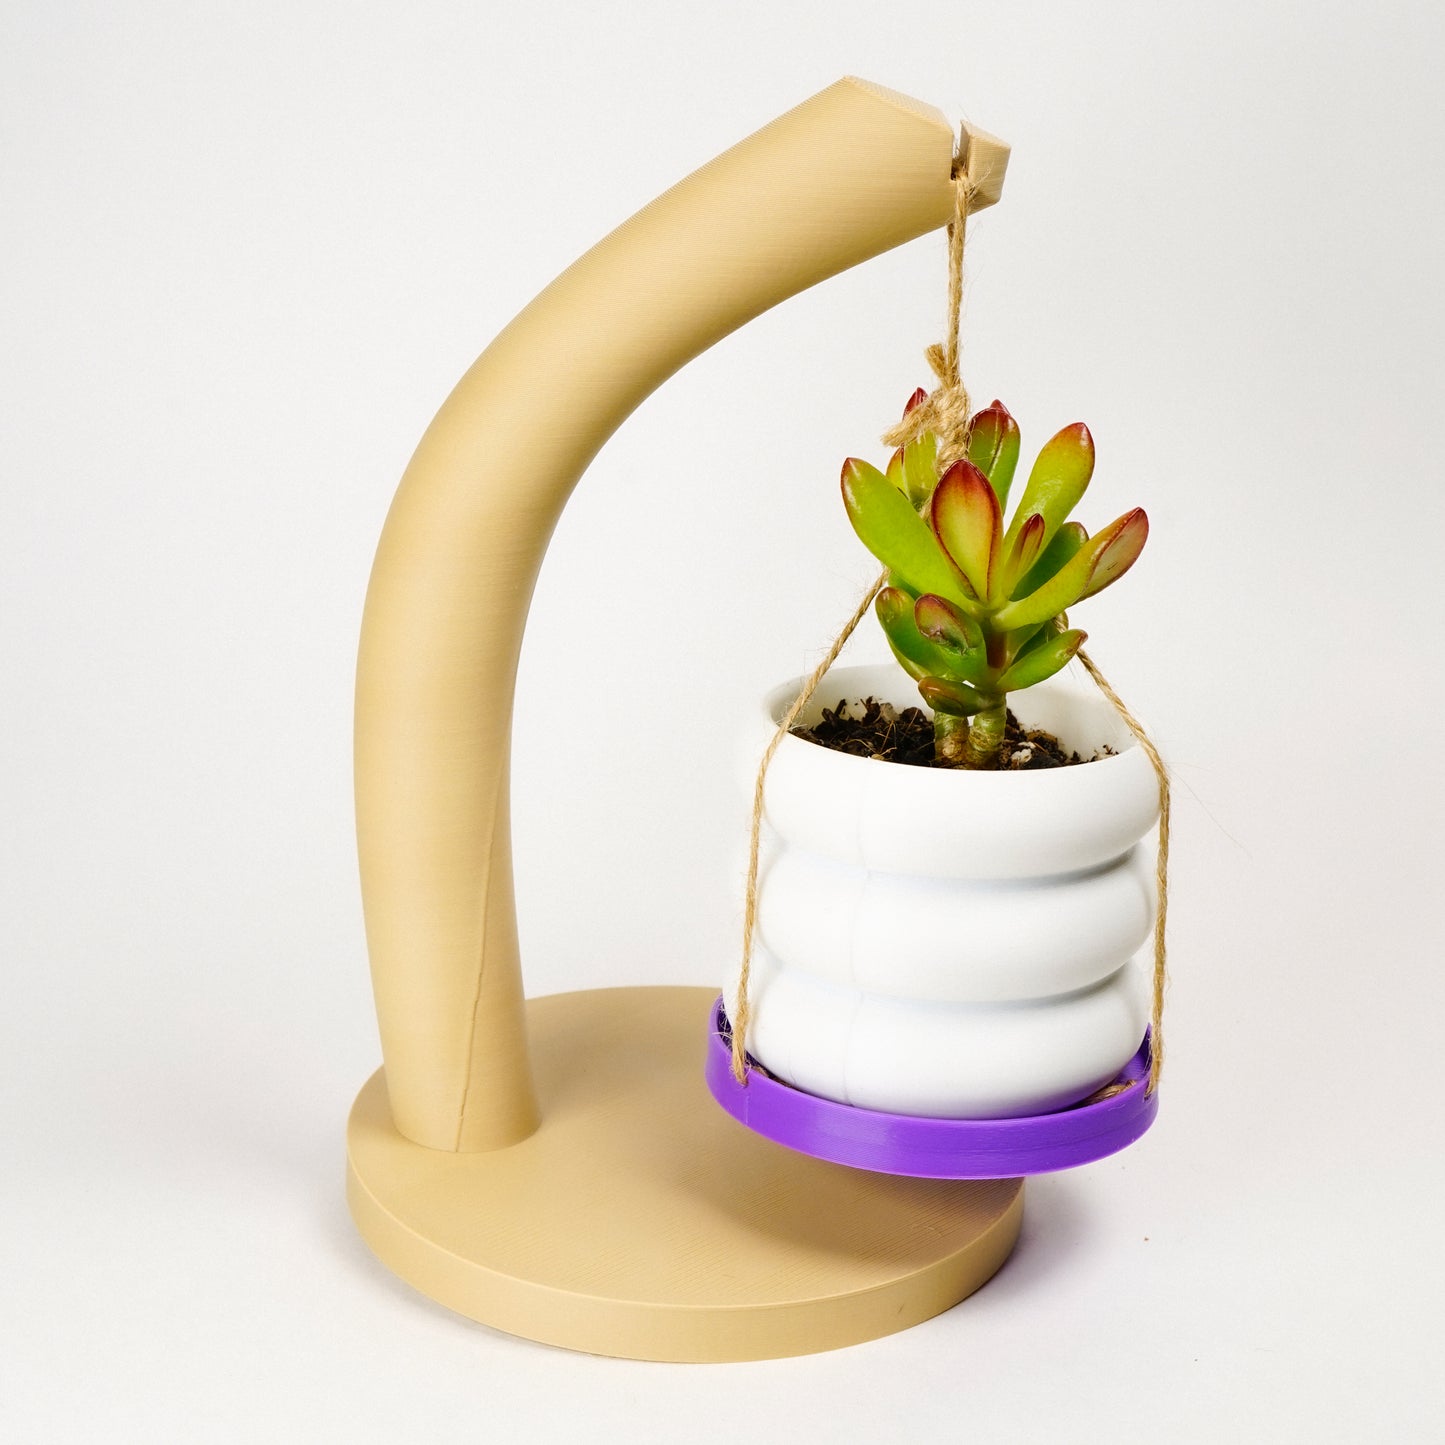 3 Inch Hanging Bubble Plant Pot with Drainage, Mini Desk Accessories, Mystery Succulent Gift Box, Cute Desk Decor for Office, Cottagecore